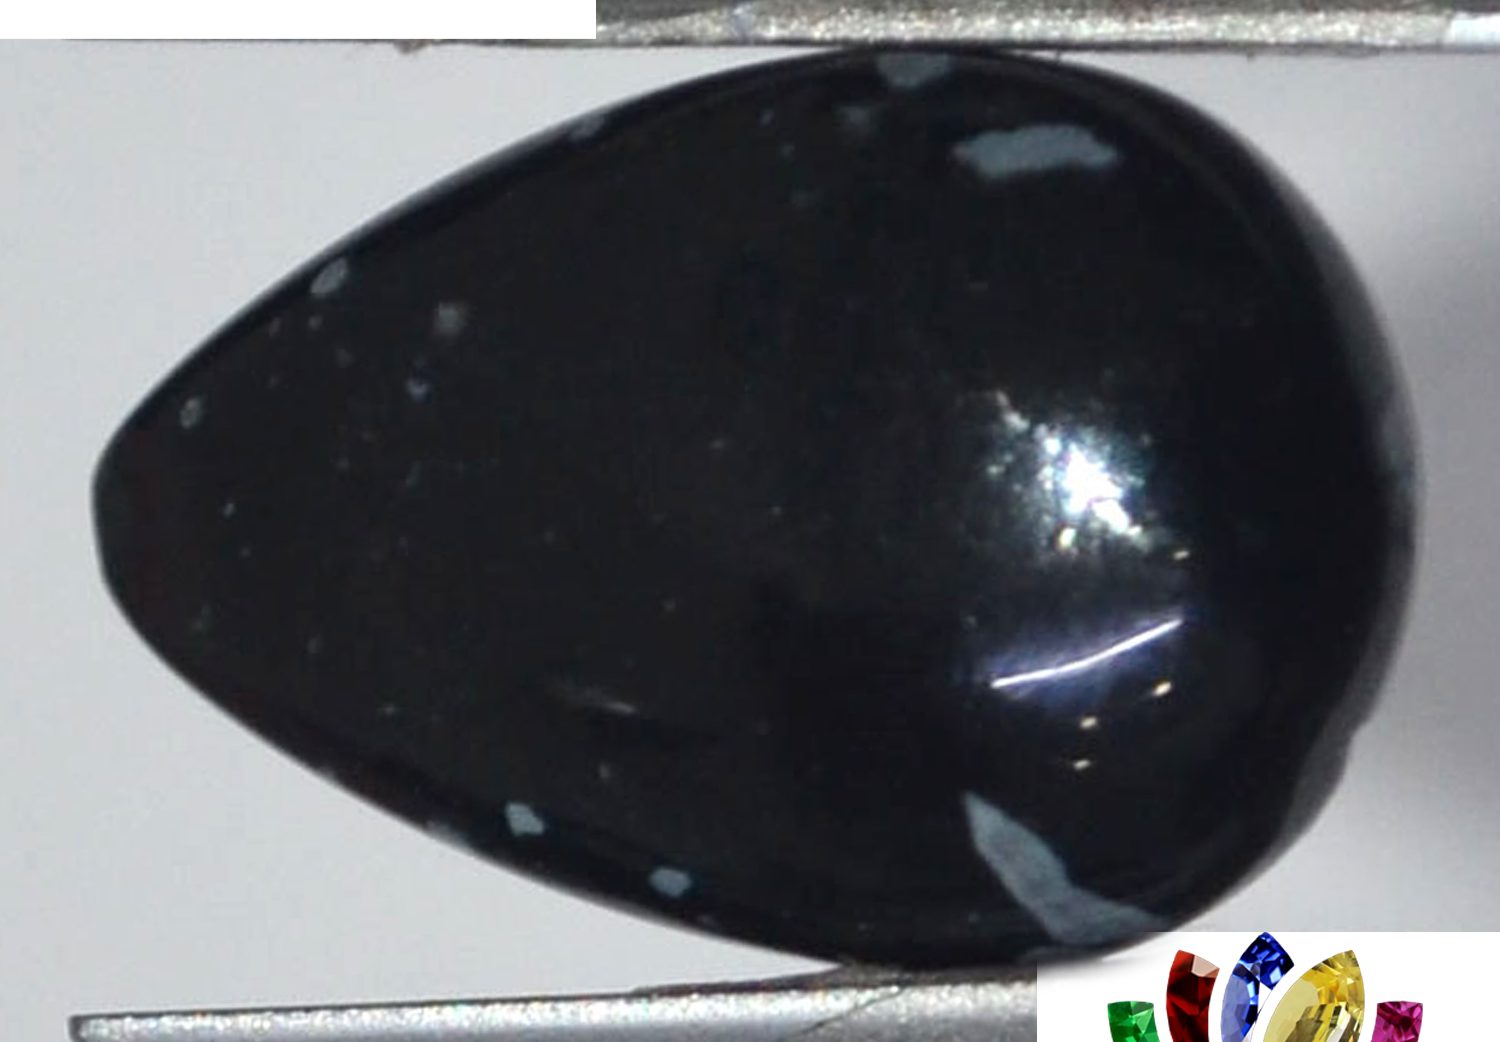 Obsidian 9.67 Ct.